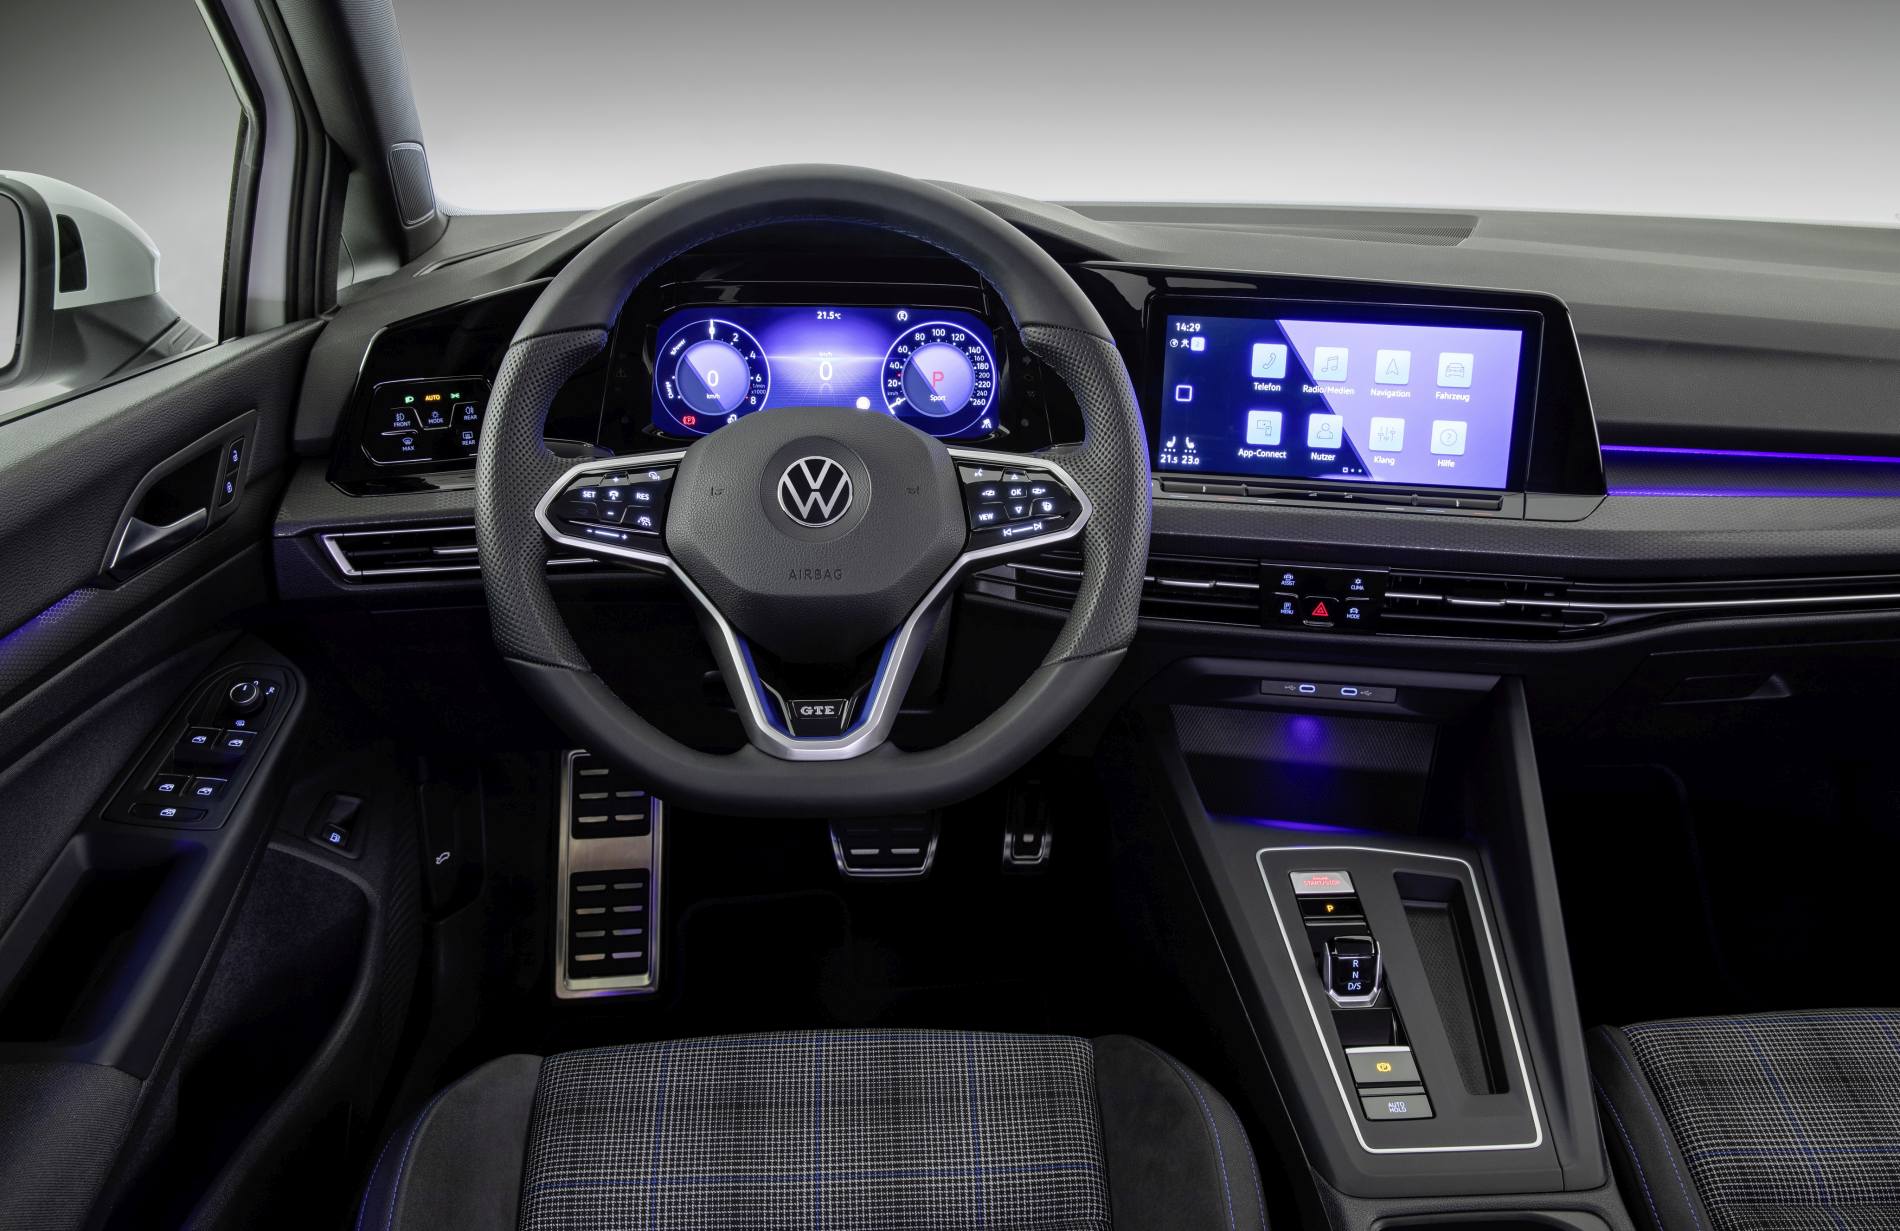 The new Volkswagen Golf GTE